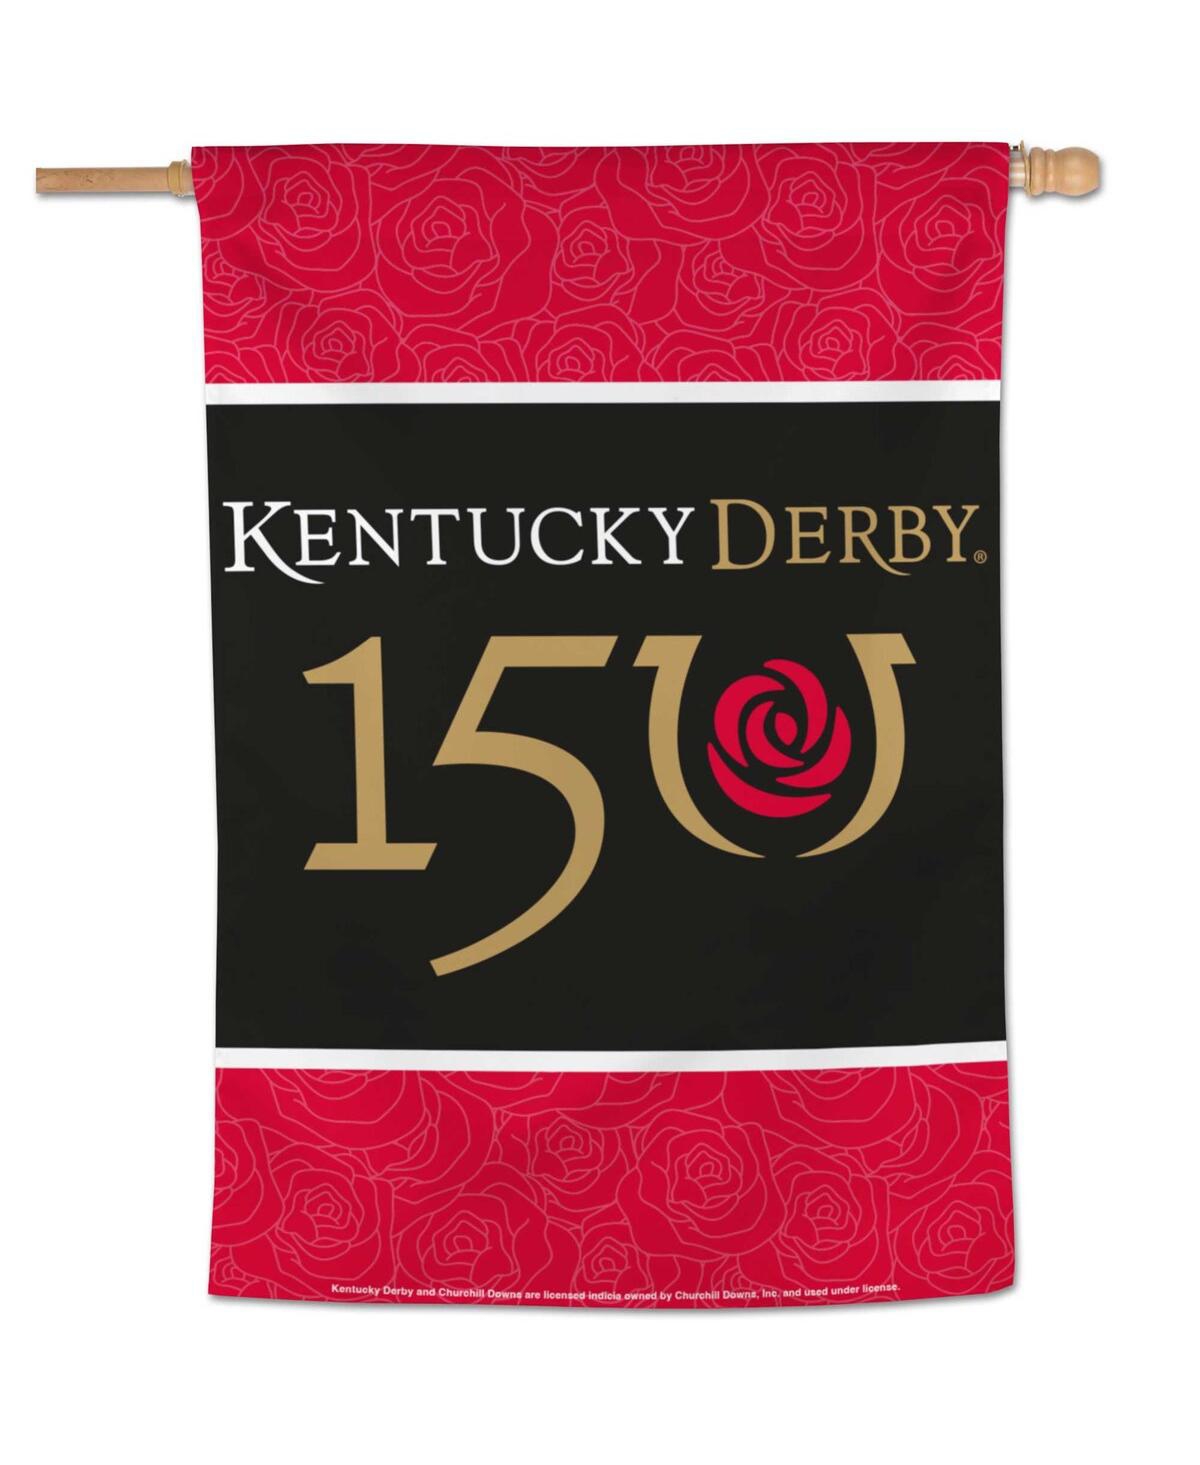 Kentucky Derby 150 28" x 40" Vertical Flag - Red, Black